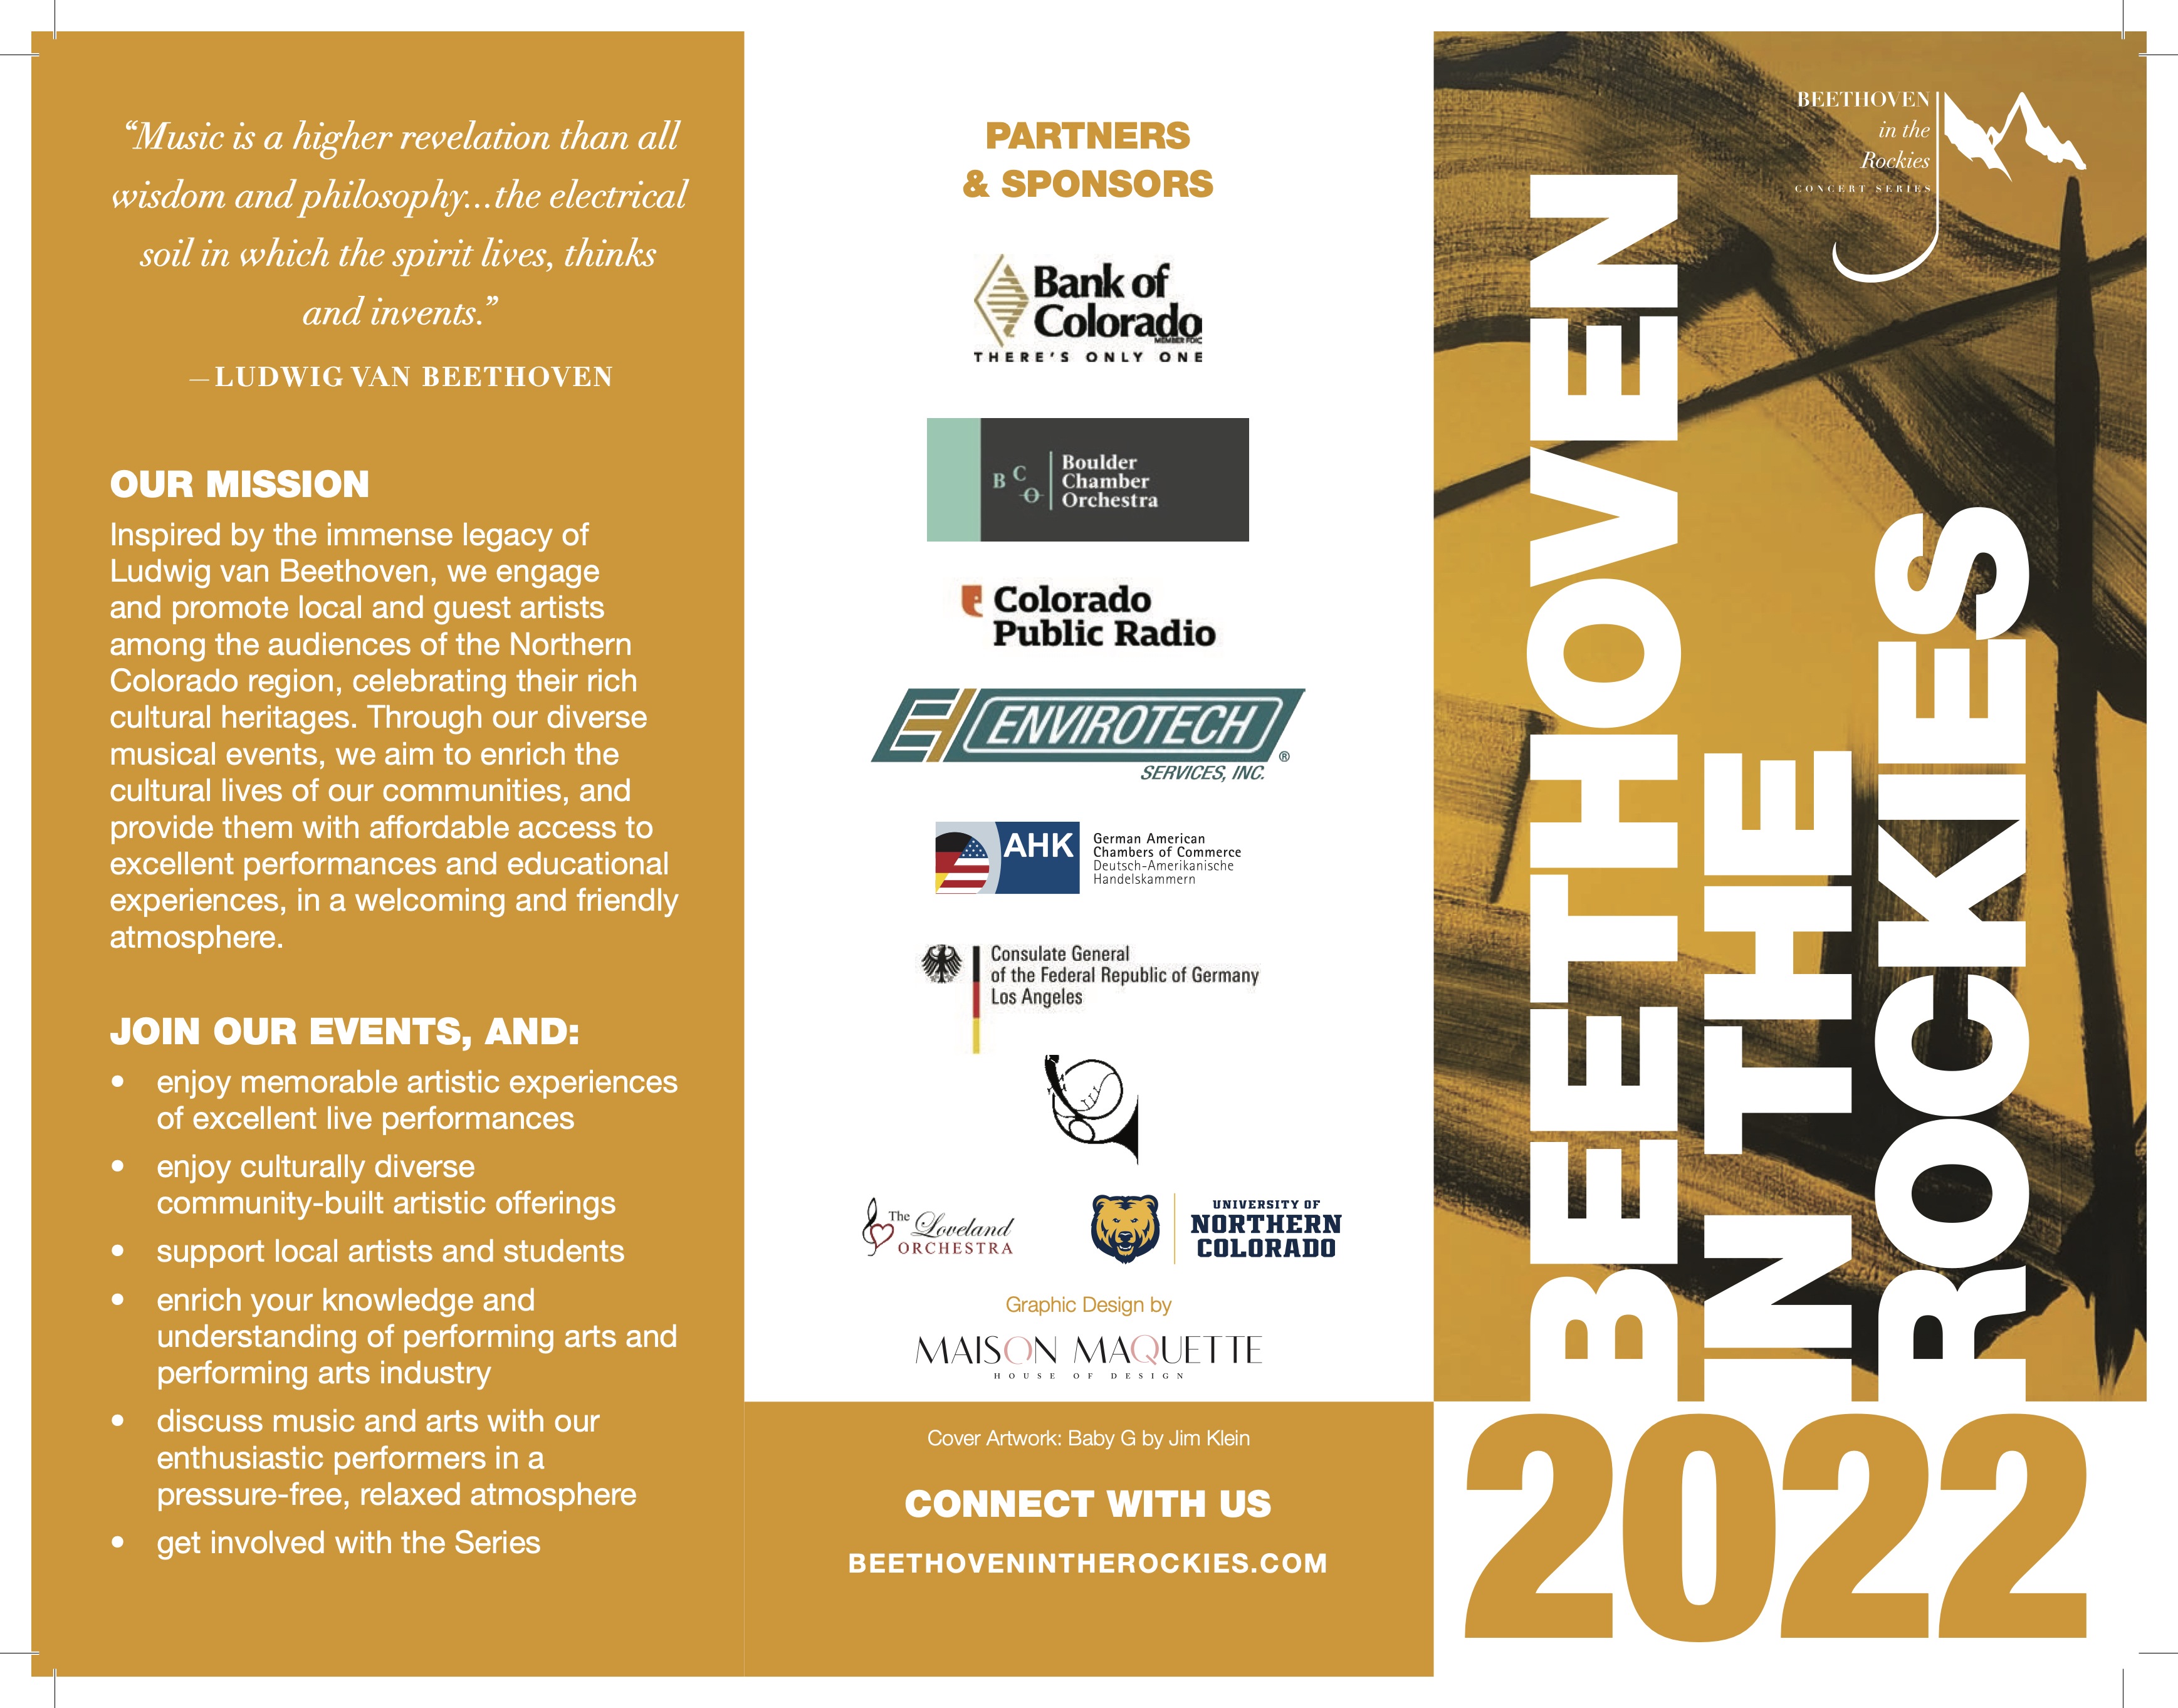 Beethoven in the Rockies: Concert Series (BITR) Official 2022 Brochure, pg. 1.